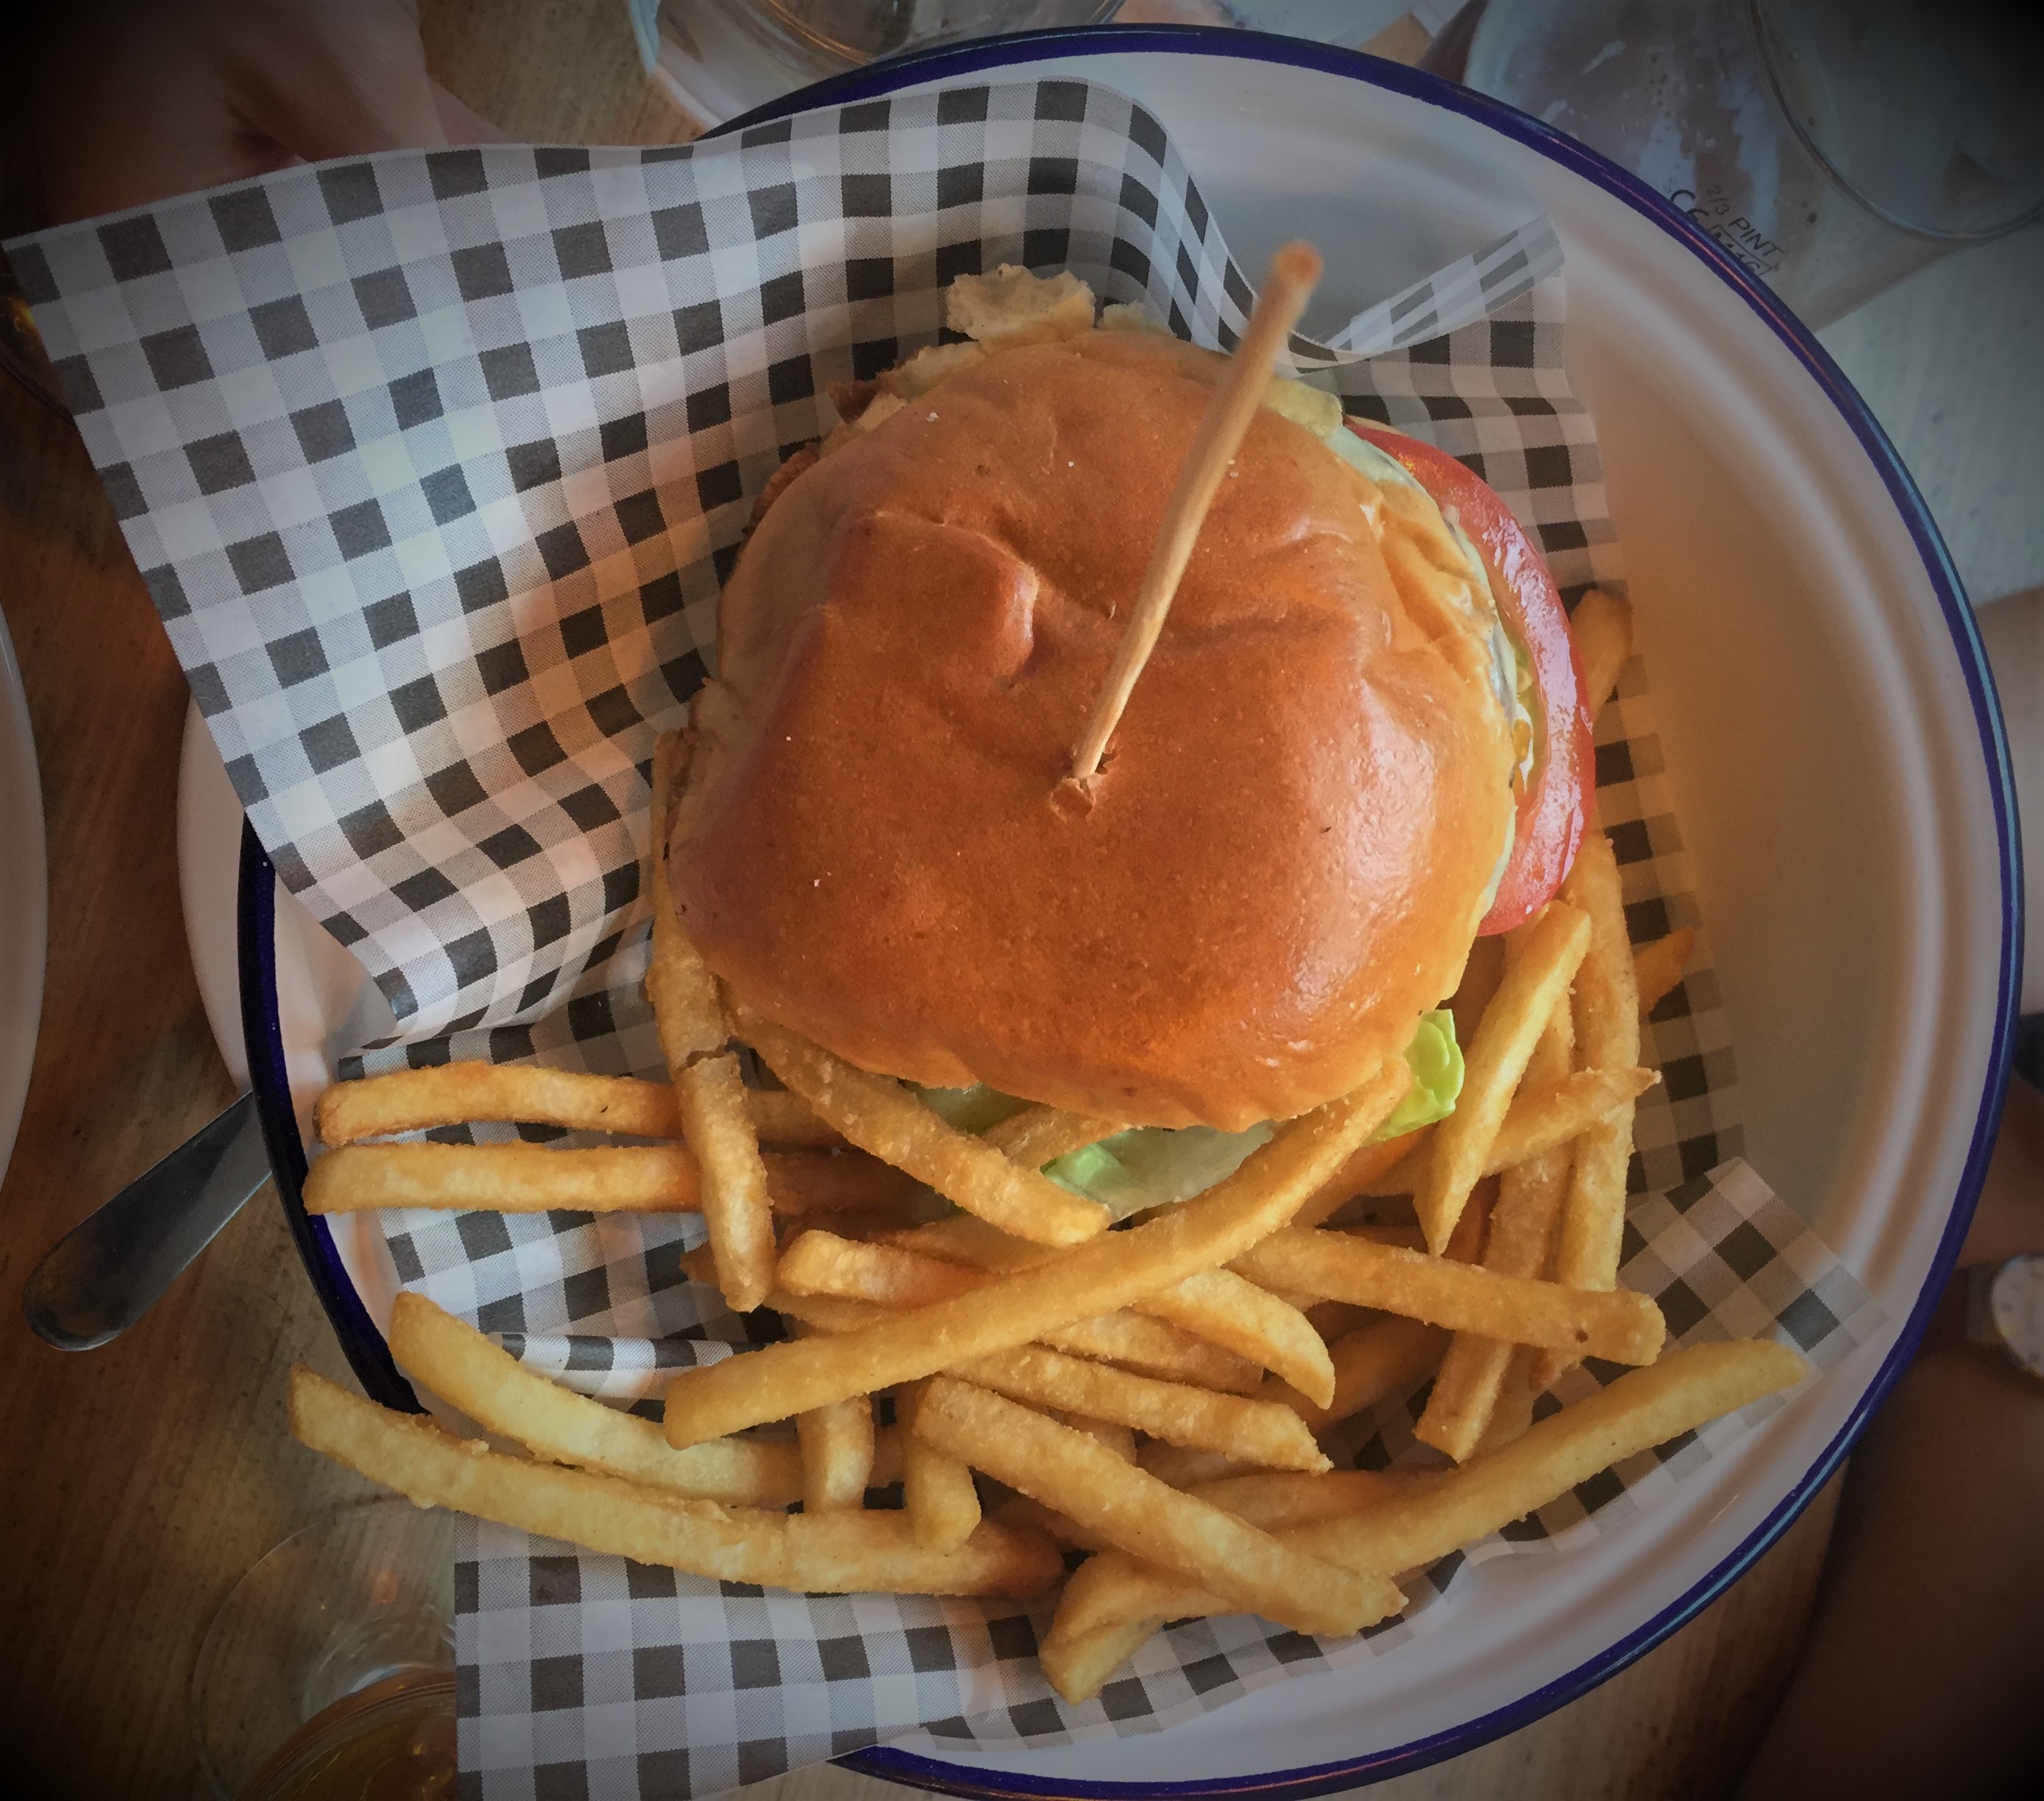 Veggie burger, smoked cheddar and fries at The Tankard - kenningtonrunoff.com